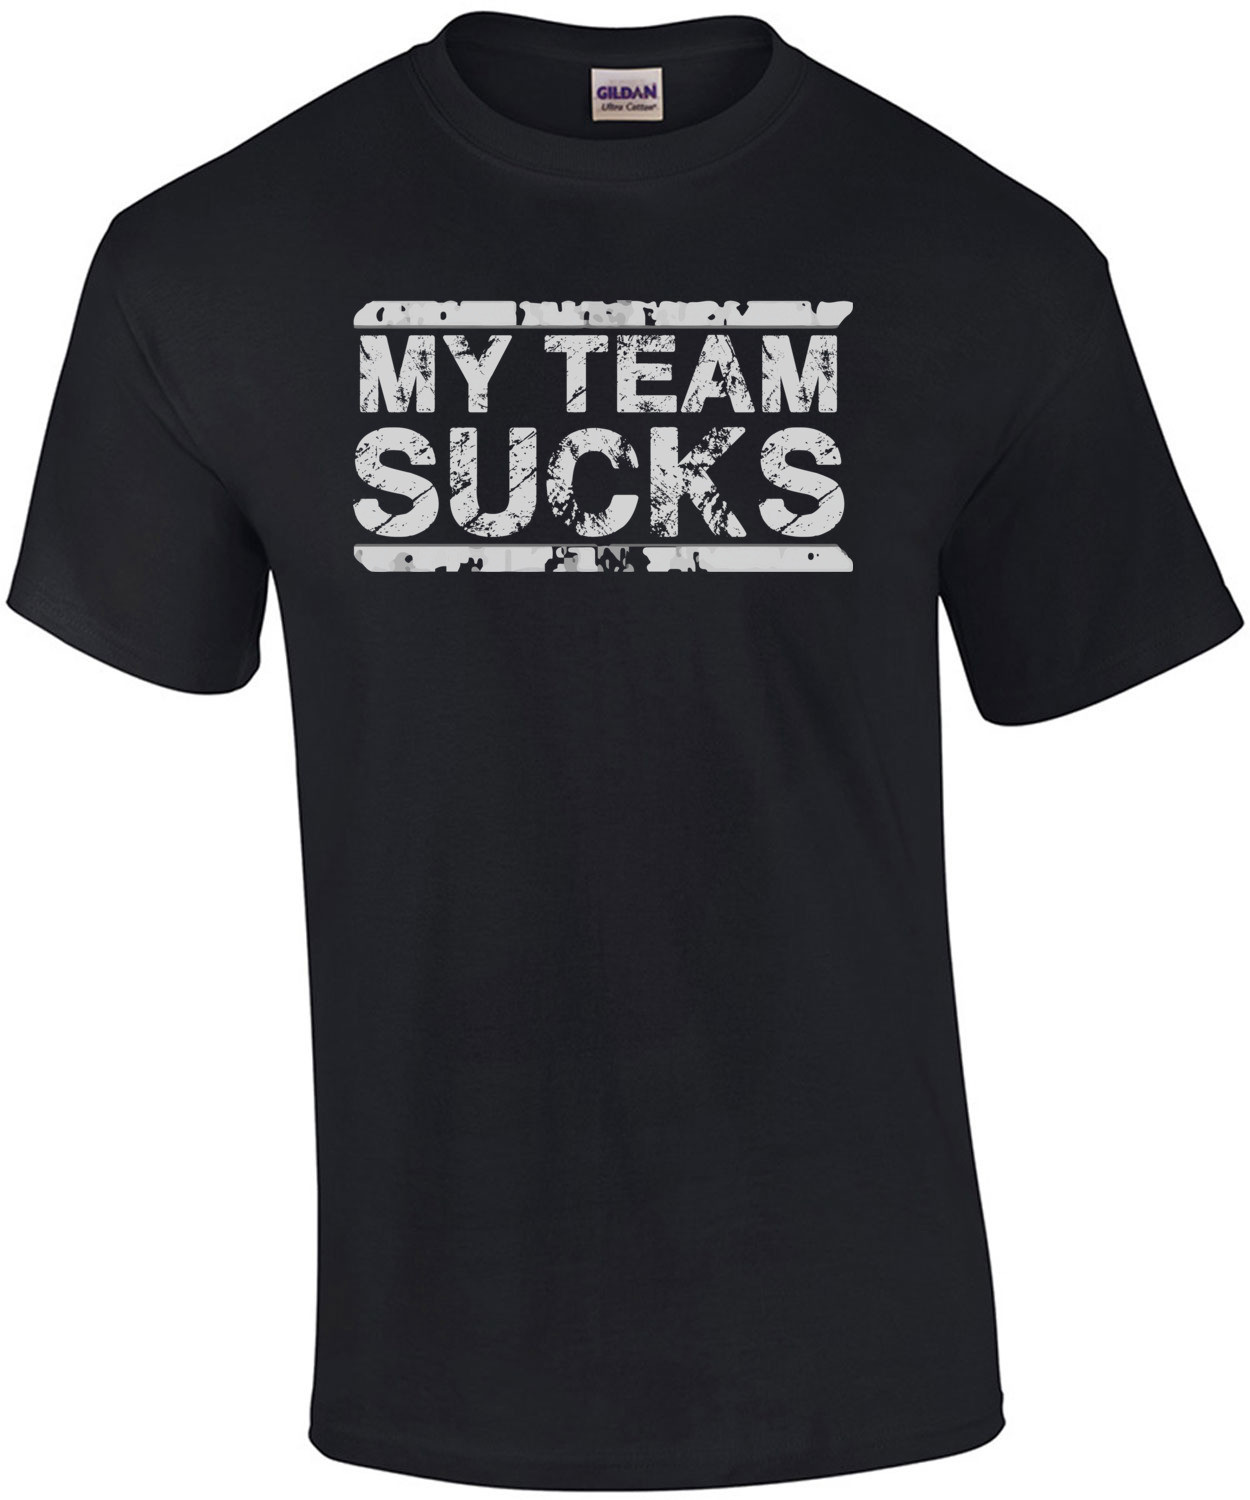 My Team Sucks - Sports Team T-Shirt